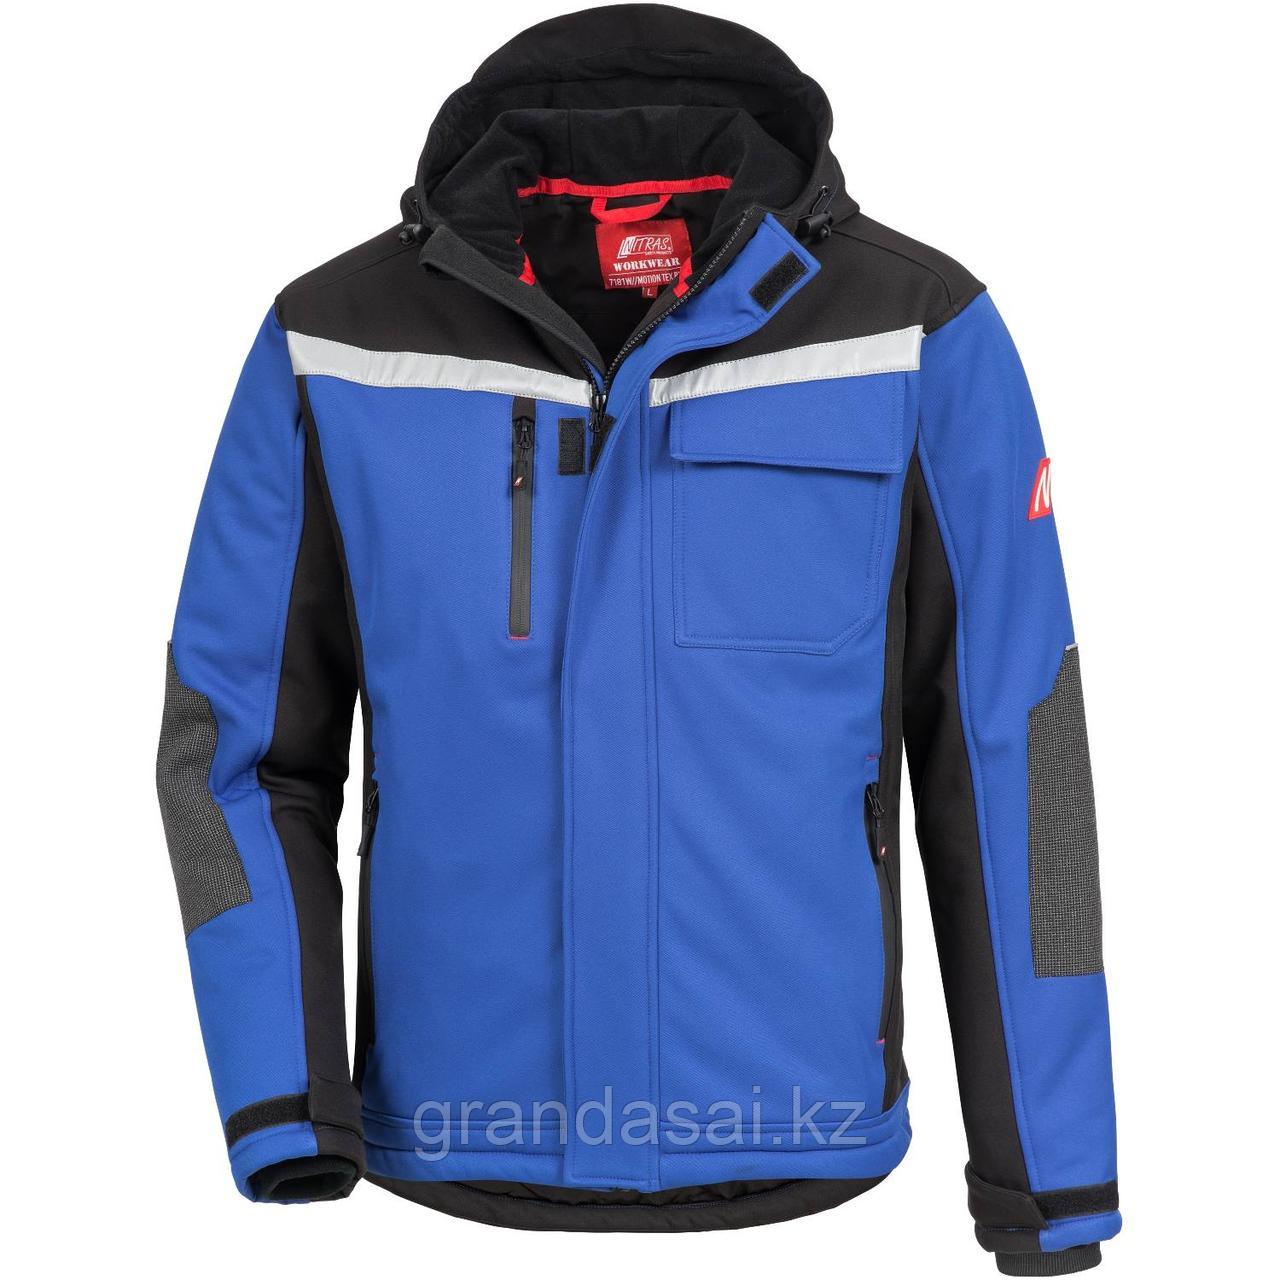 NITRAS 7181W, зимняя мягкая куртка, цвет синий / черный